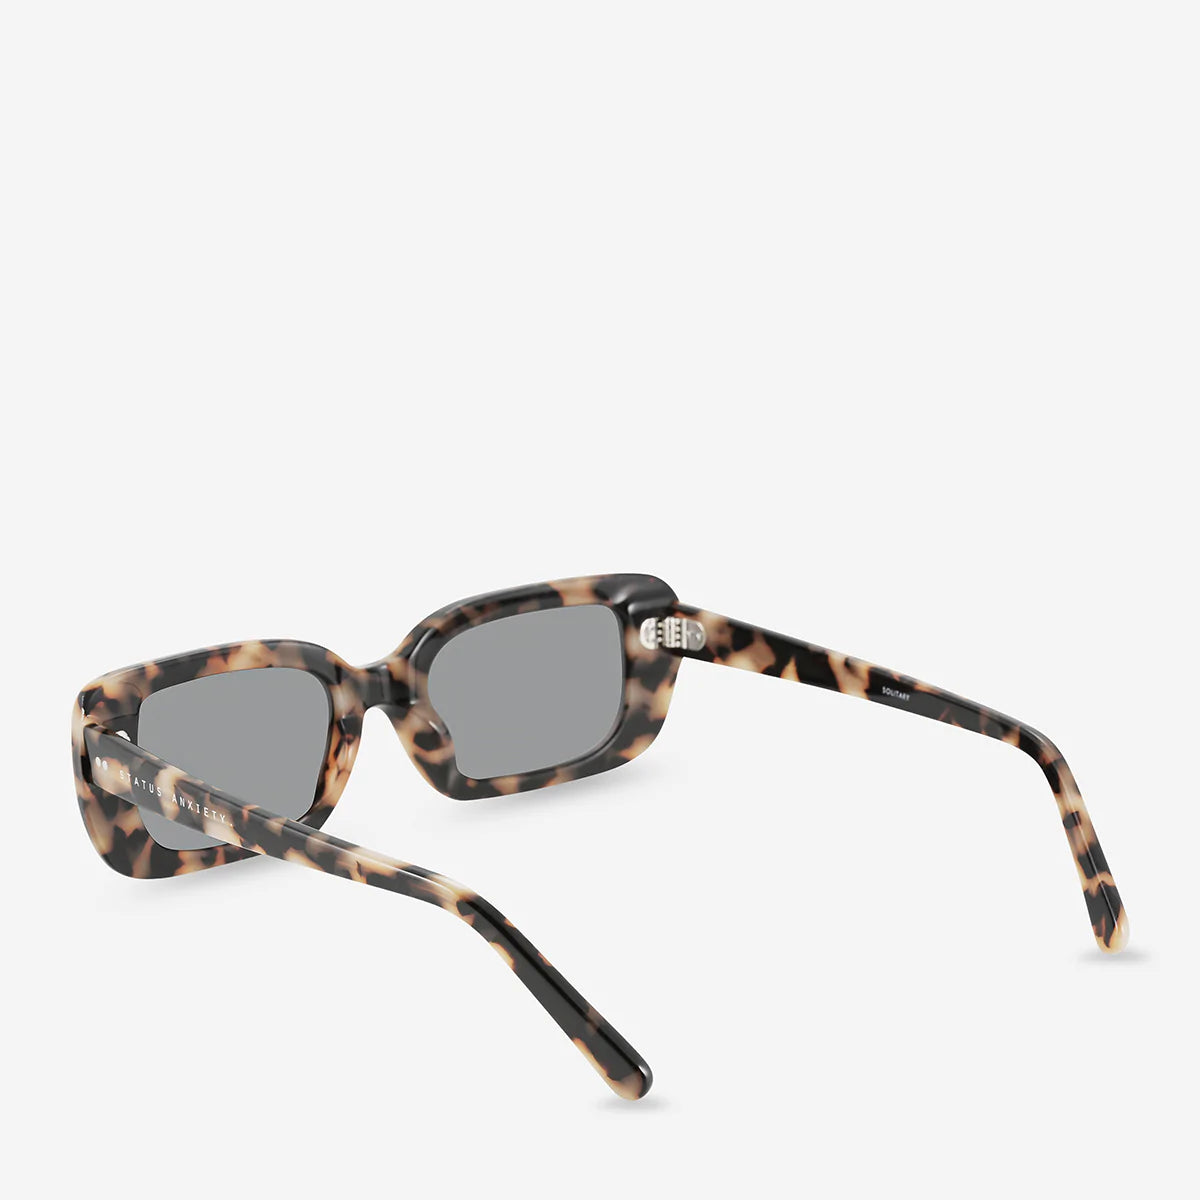 Solitary Sunglasses in White Tort